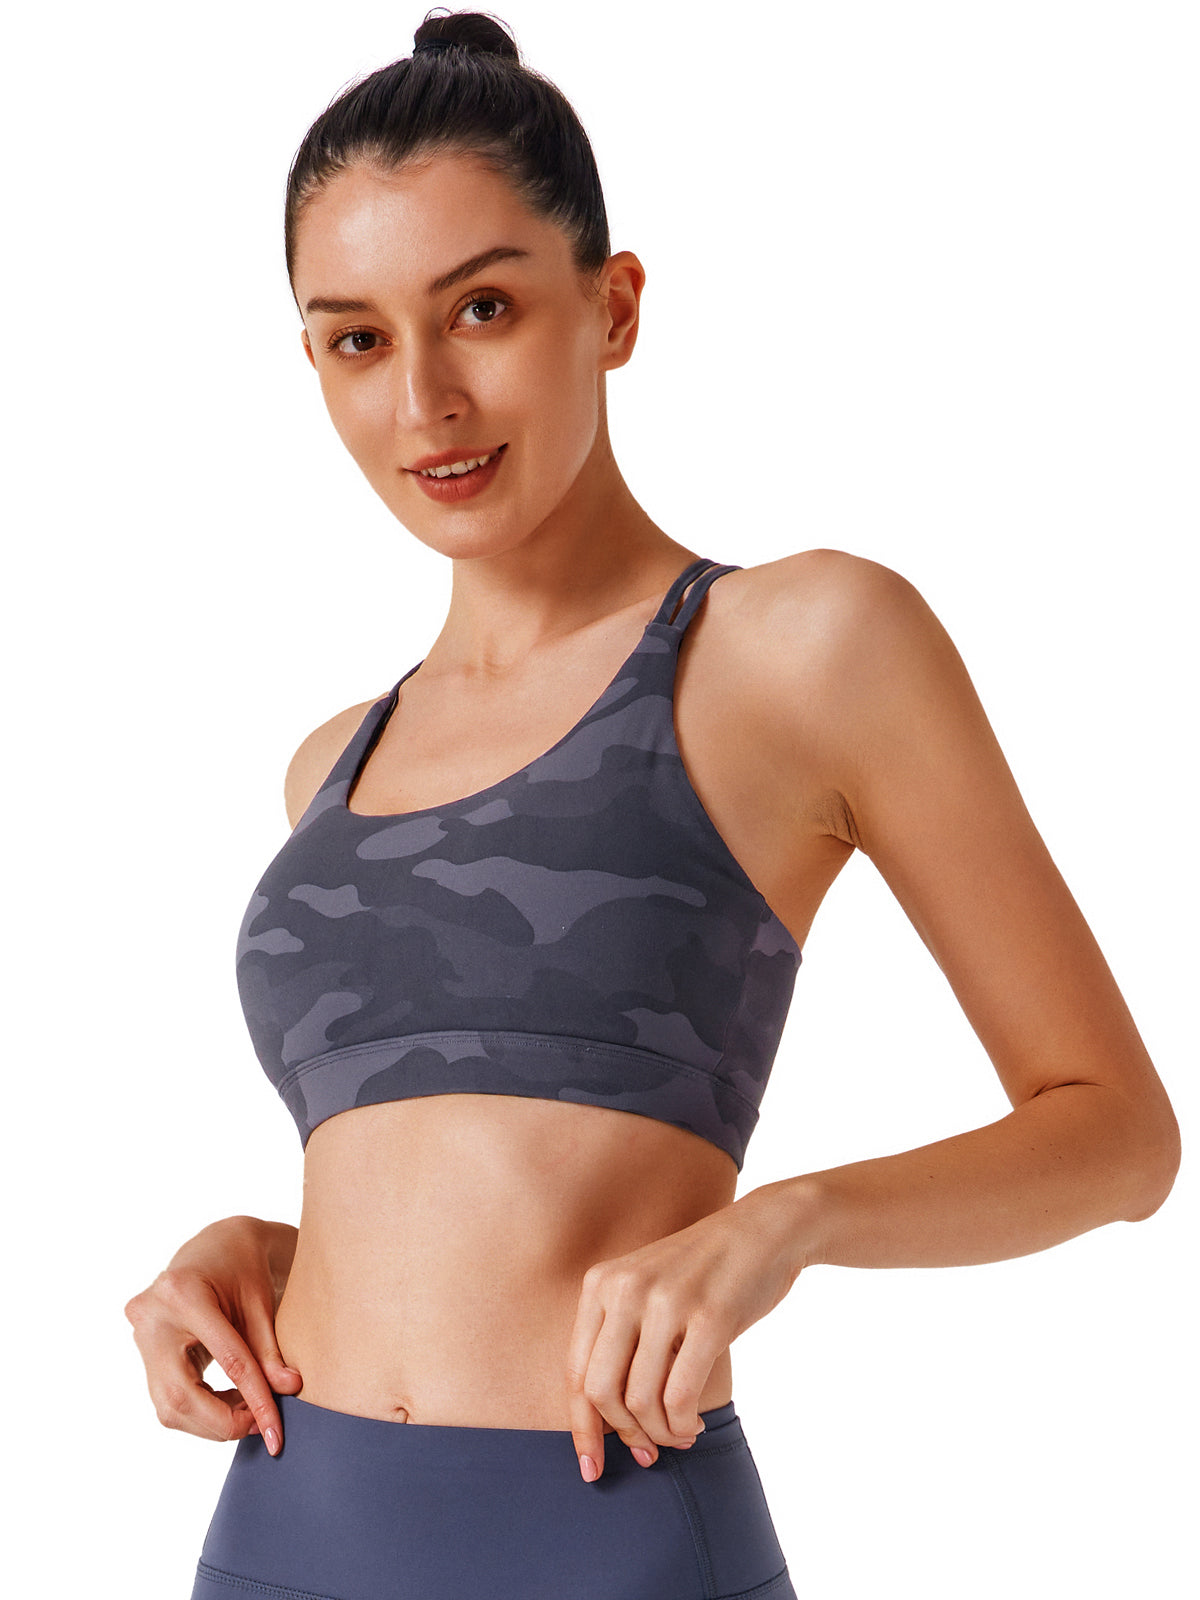 Running Girl Womens Grey Leopard Print Sports Bra Size XL - beyond exchange